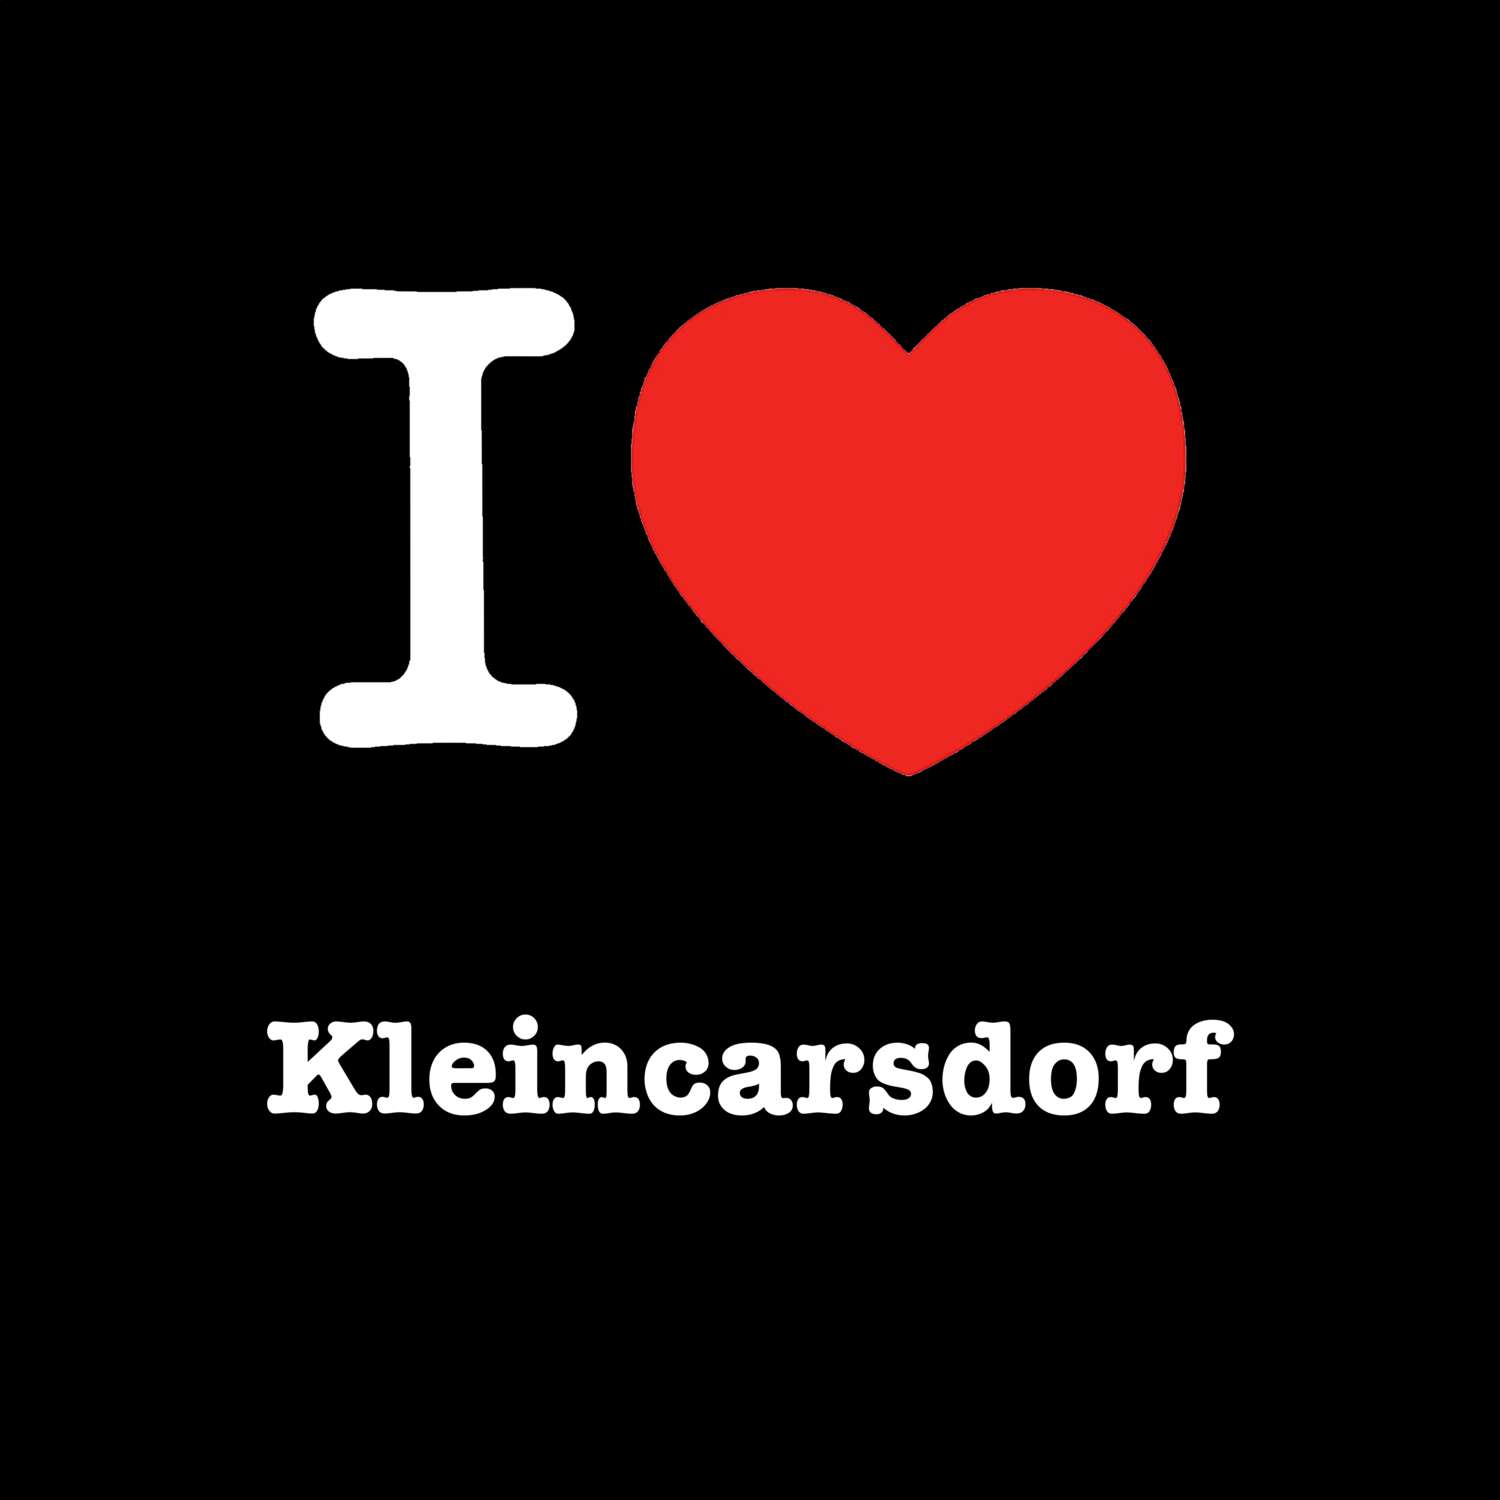 Kleincarsdorf T-Shirt »I love«